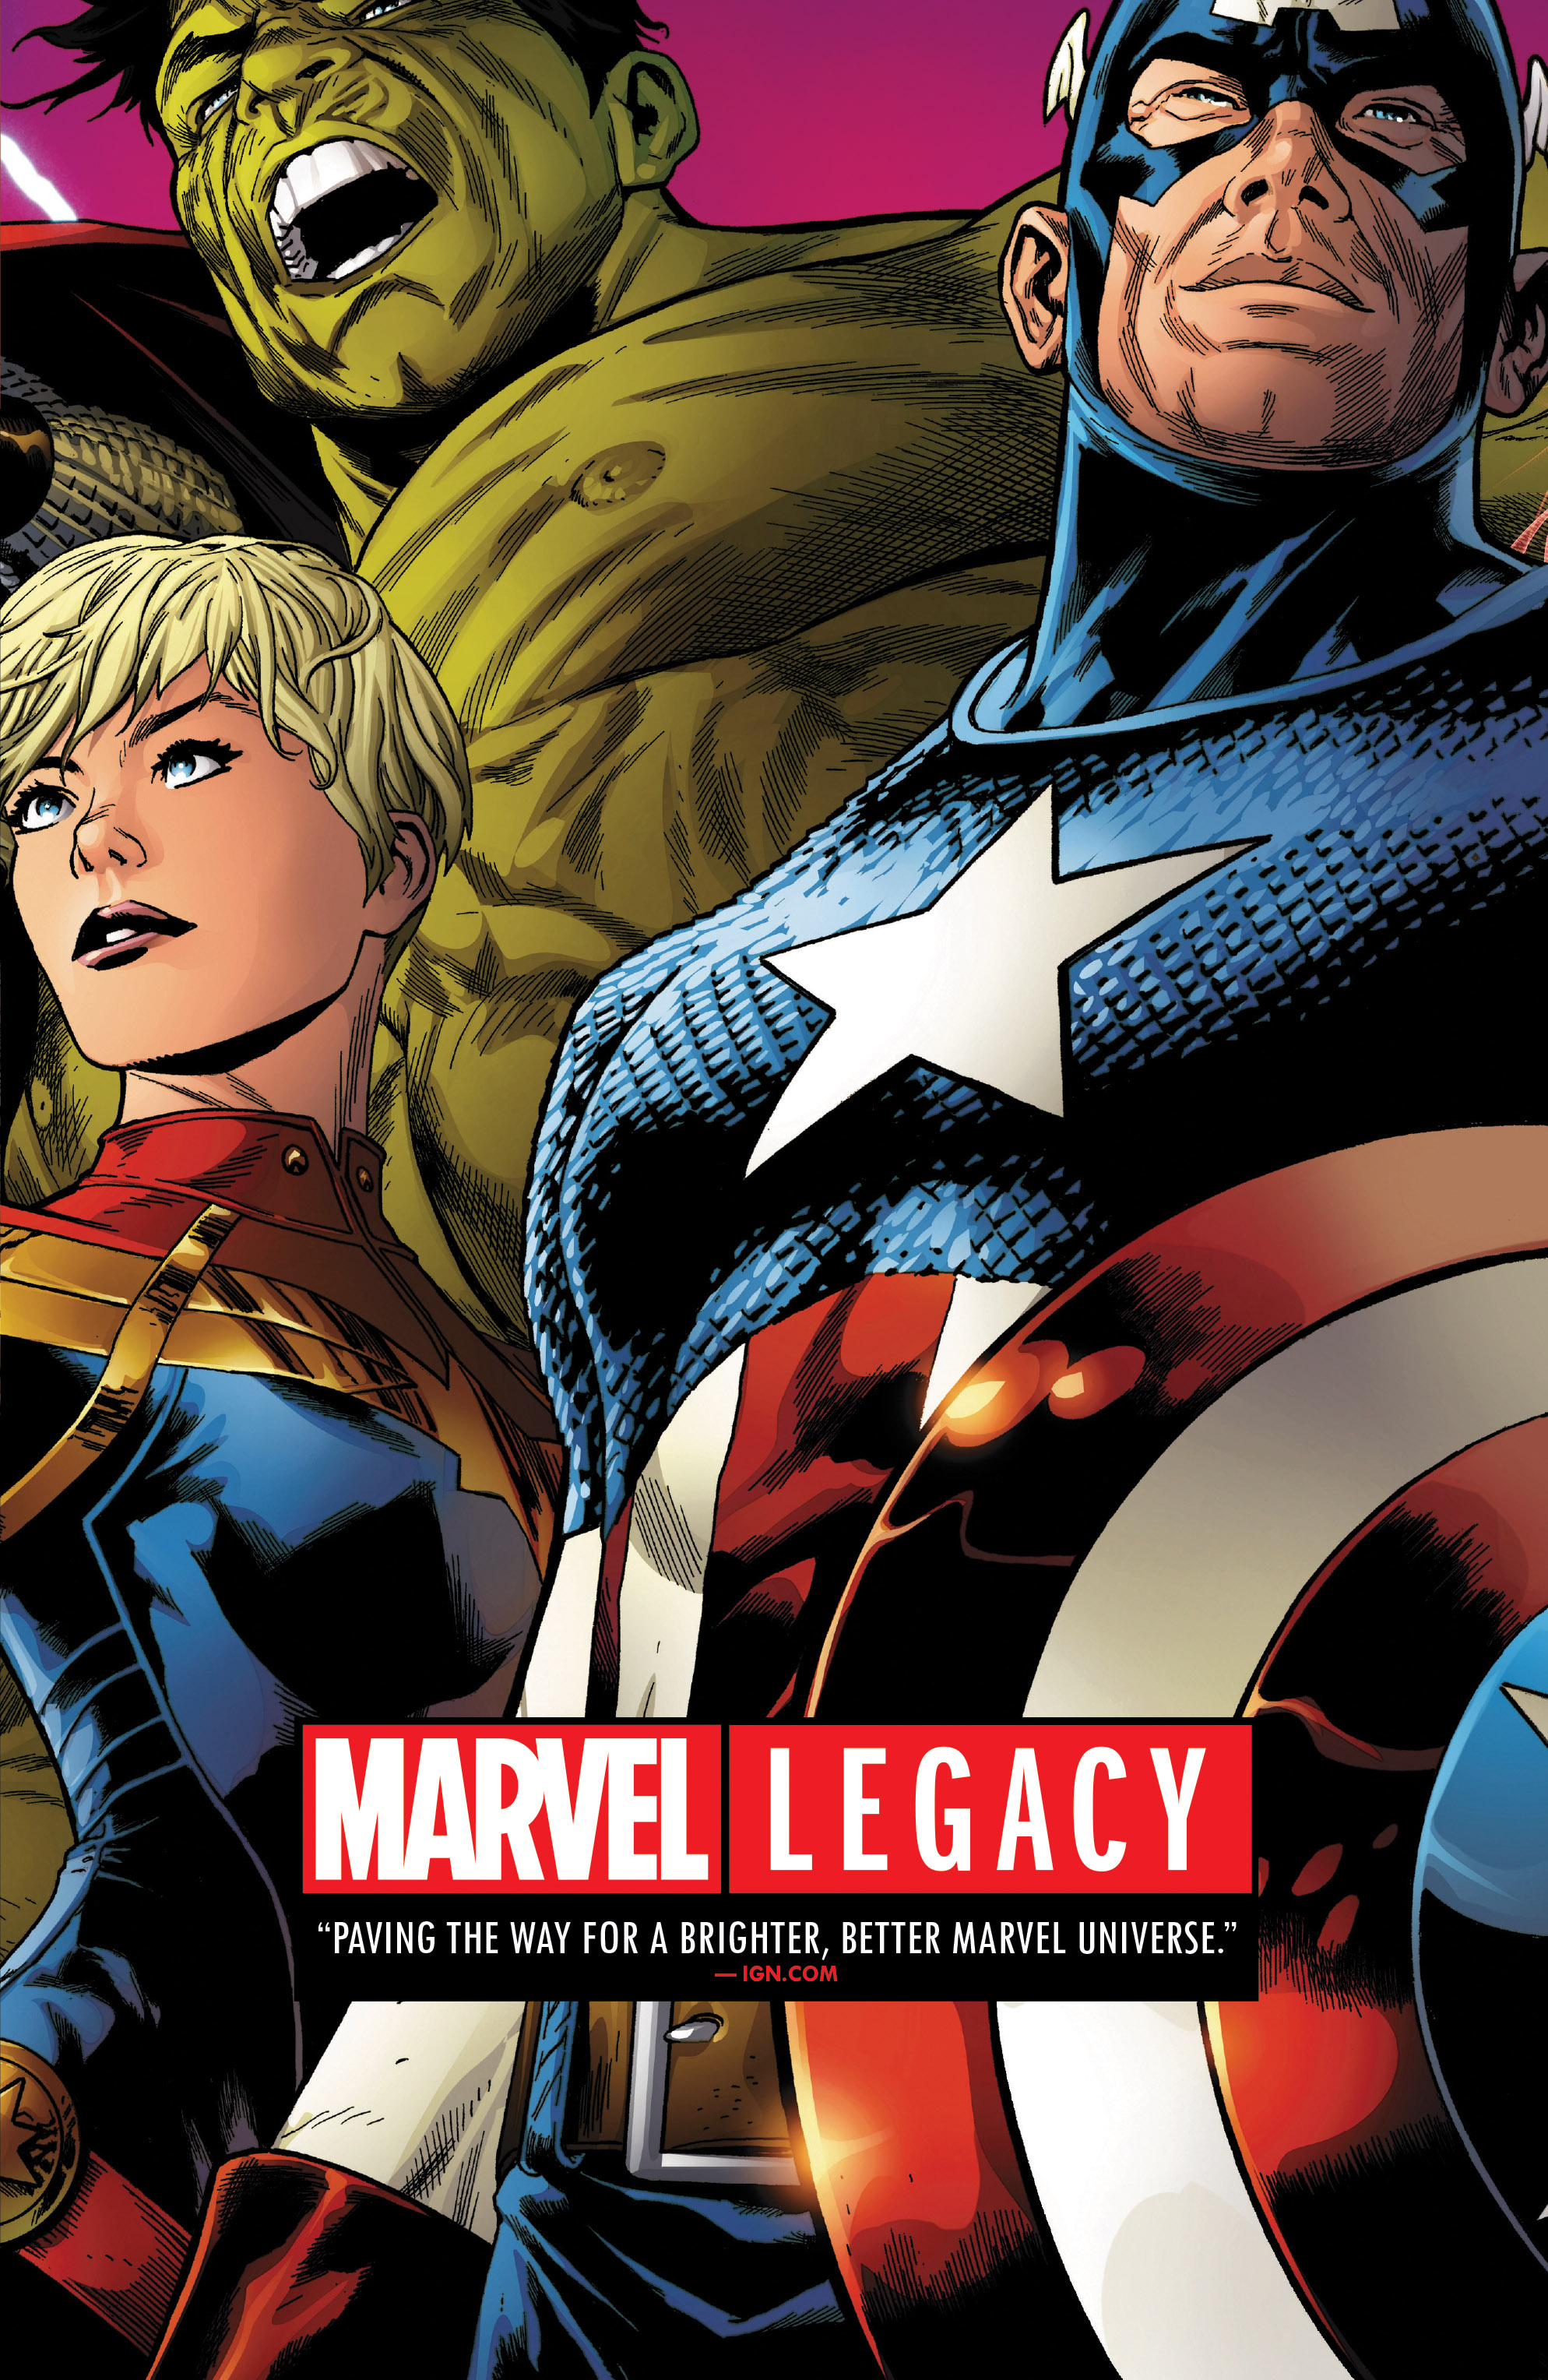 Marvel comics legacy